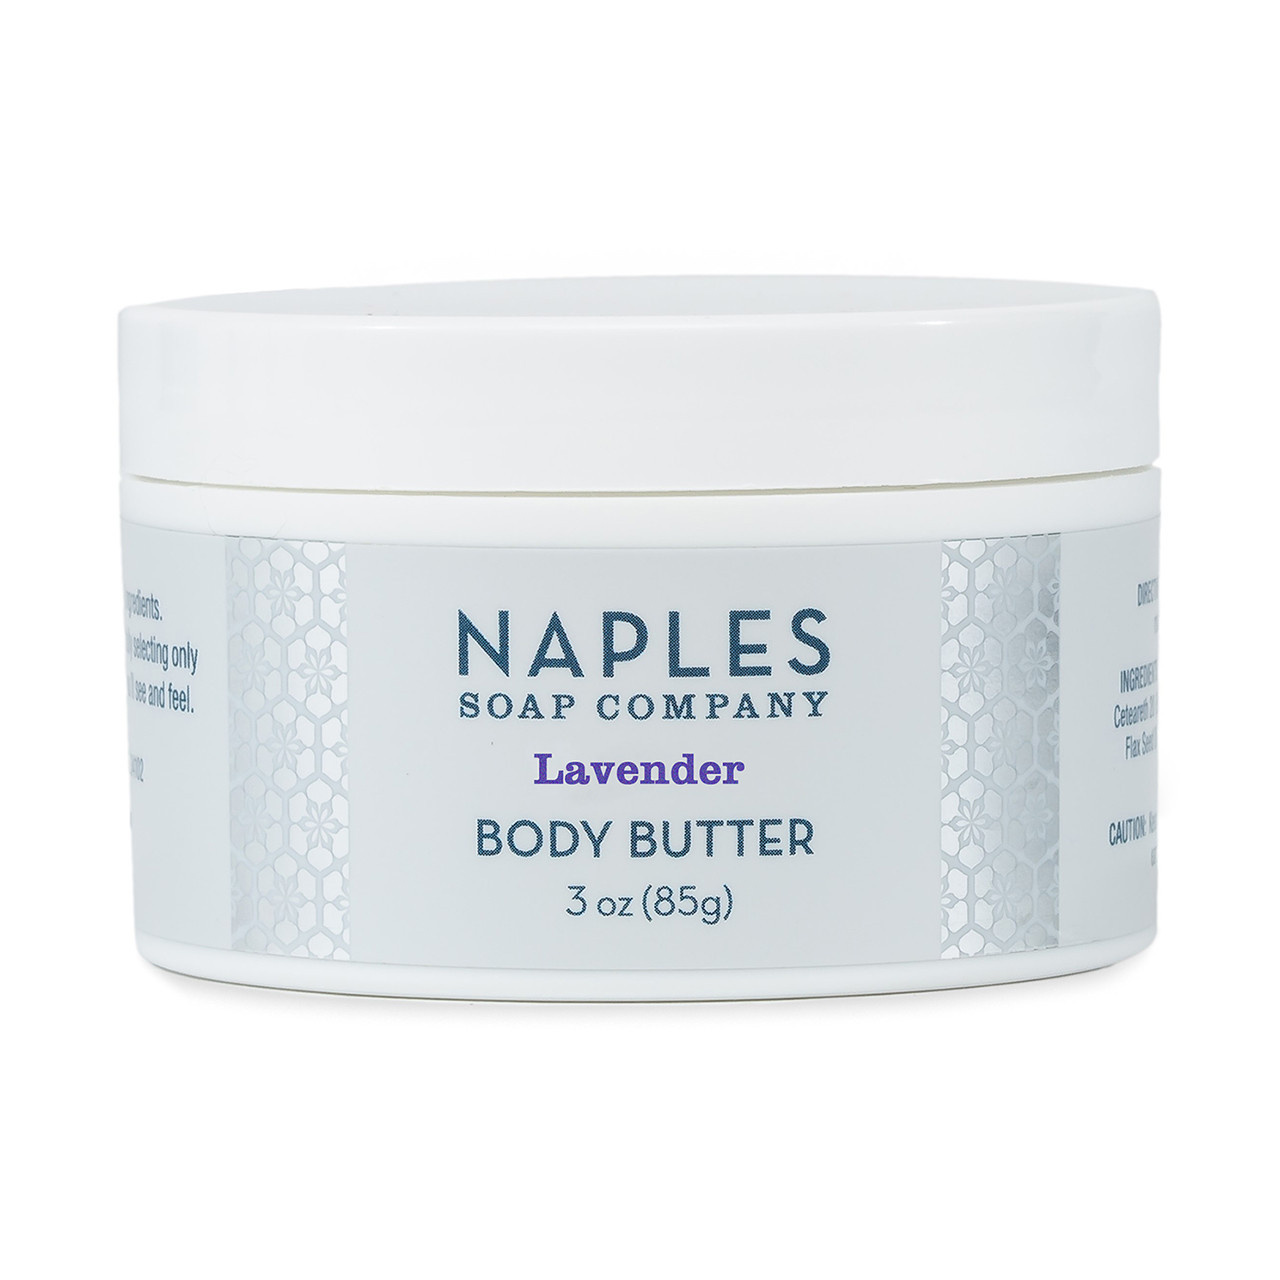 Naples Soap Co. Relax Wellness Box